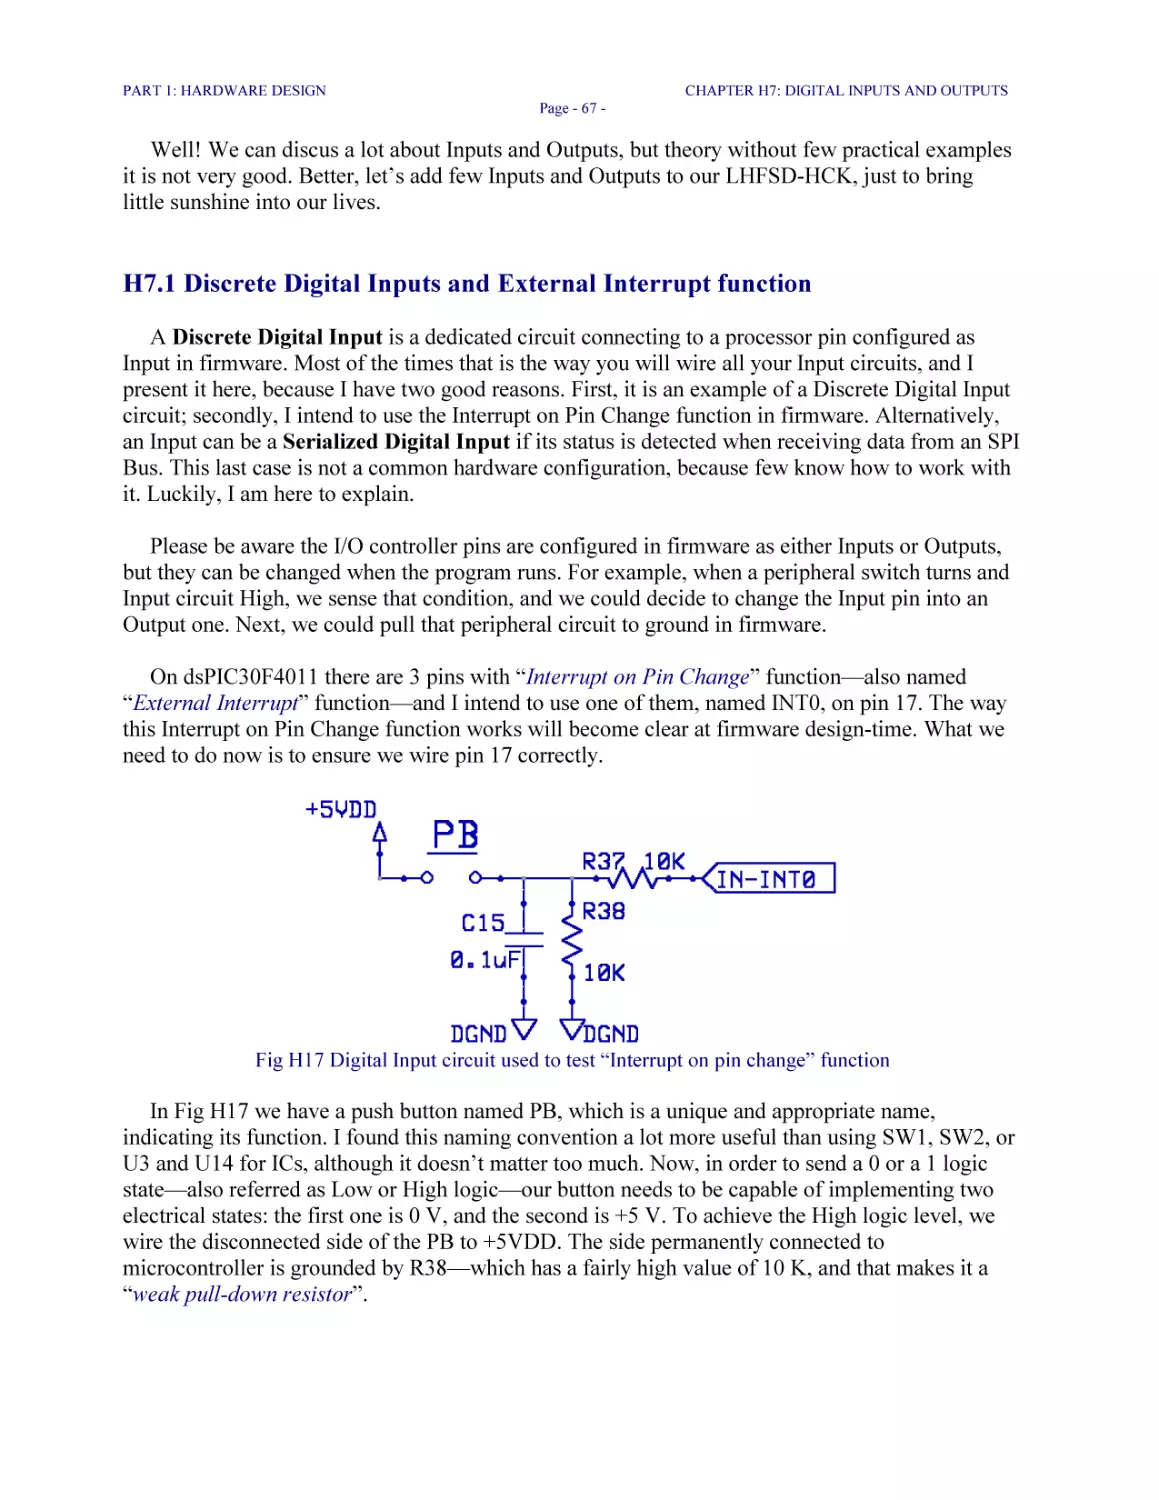 H7.1 Discrete Digital Inputs and External Interrupt function